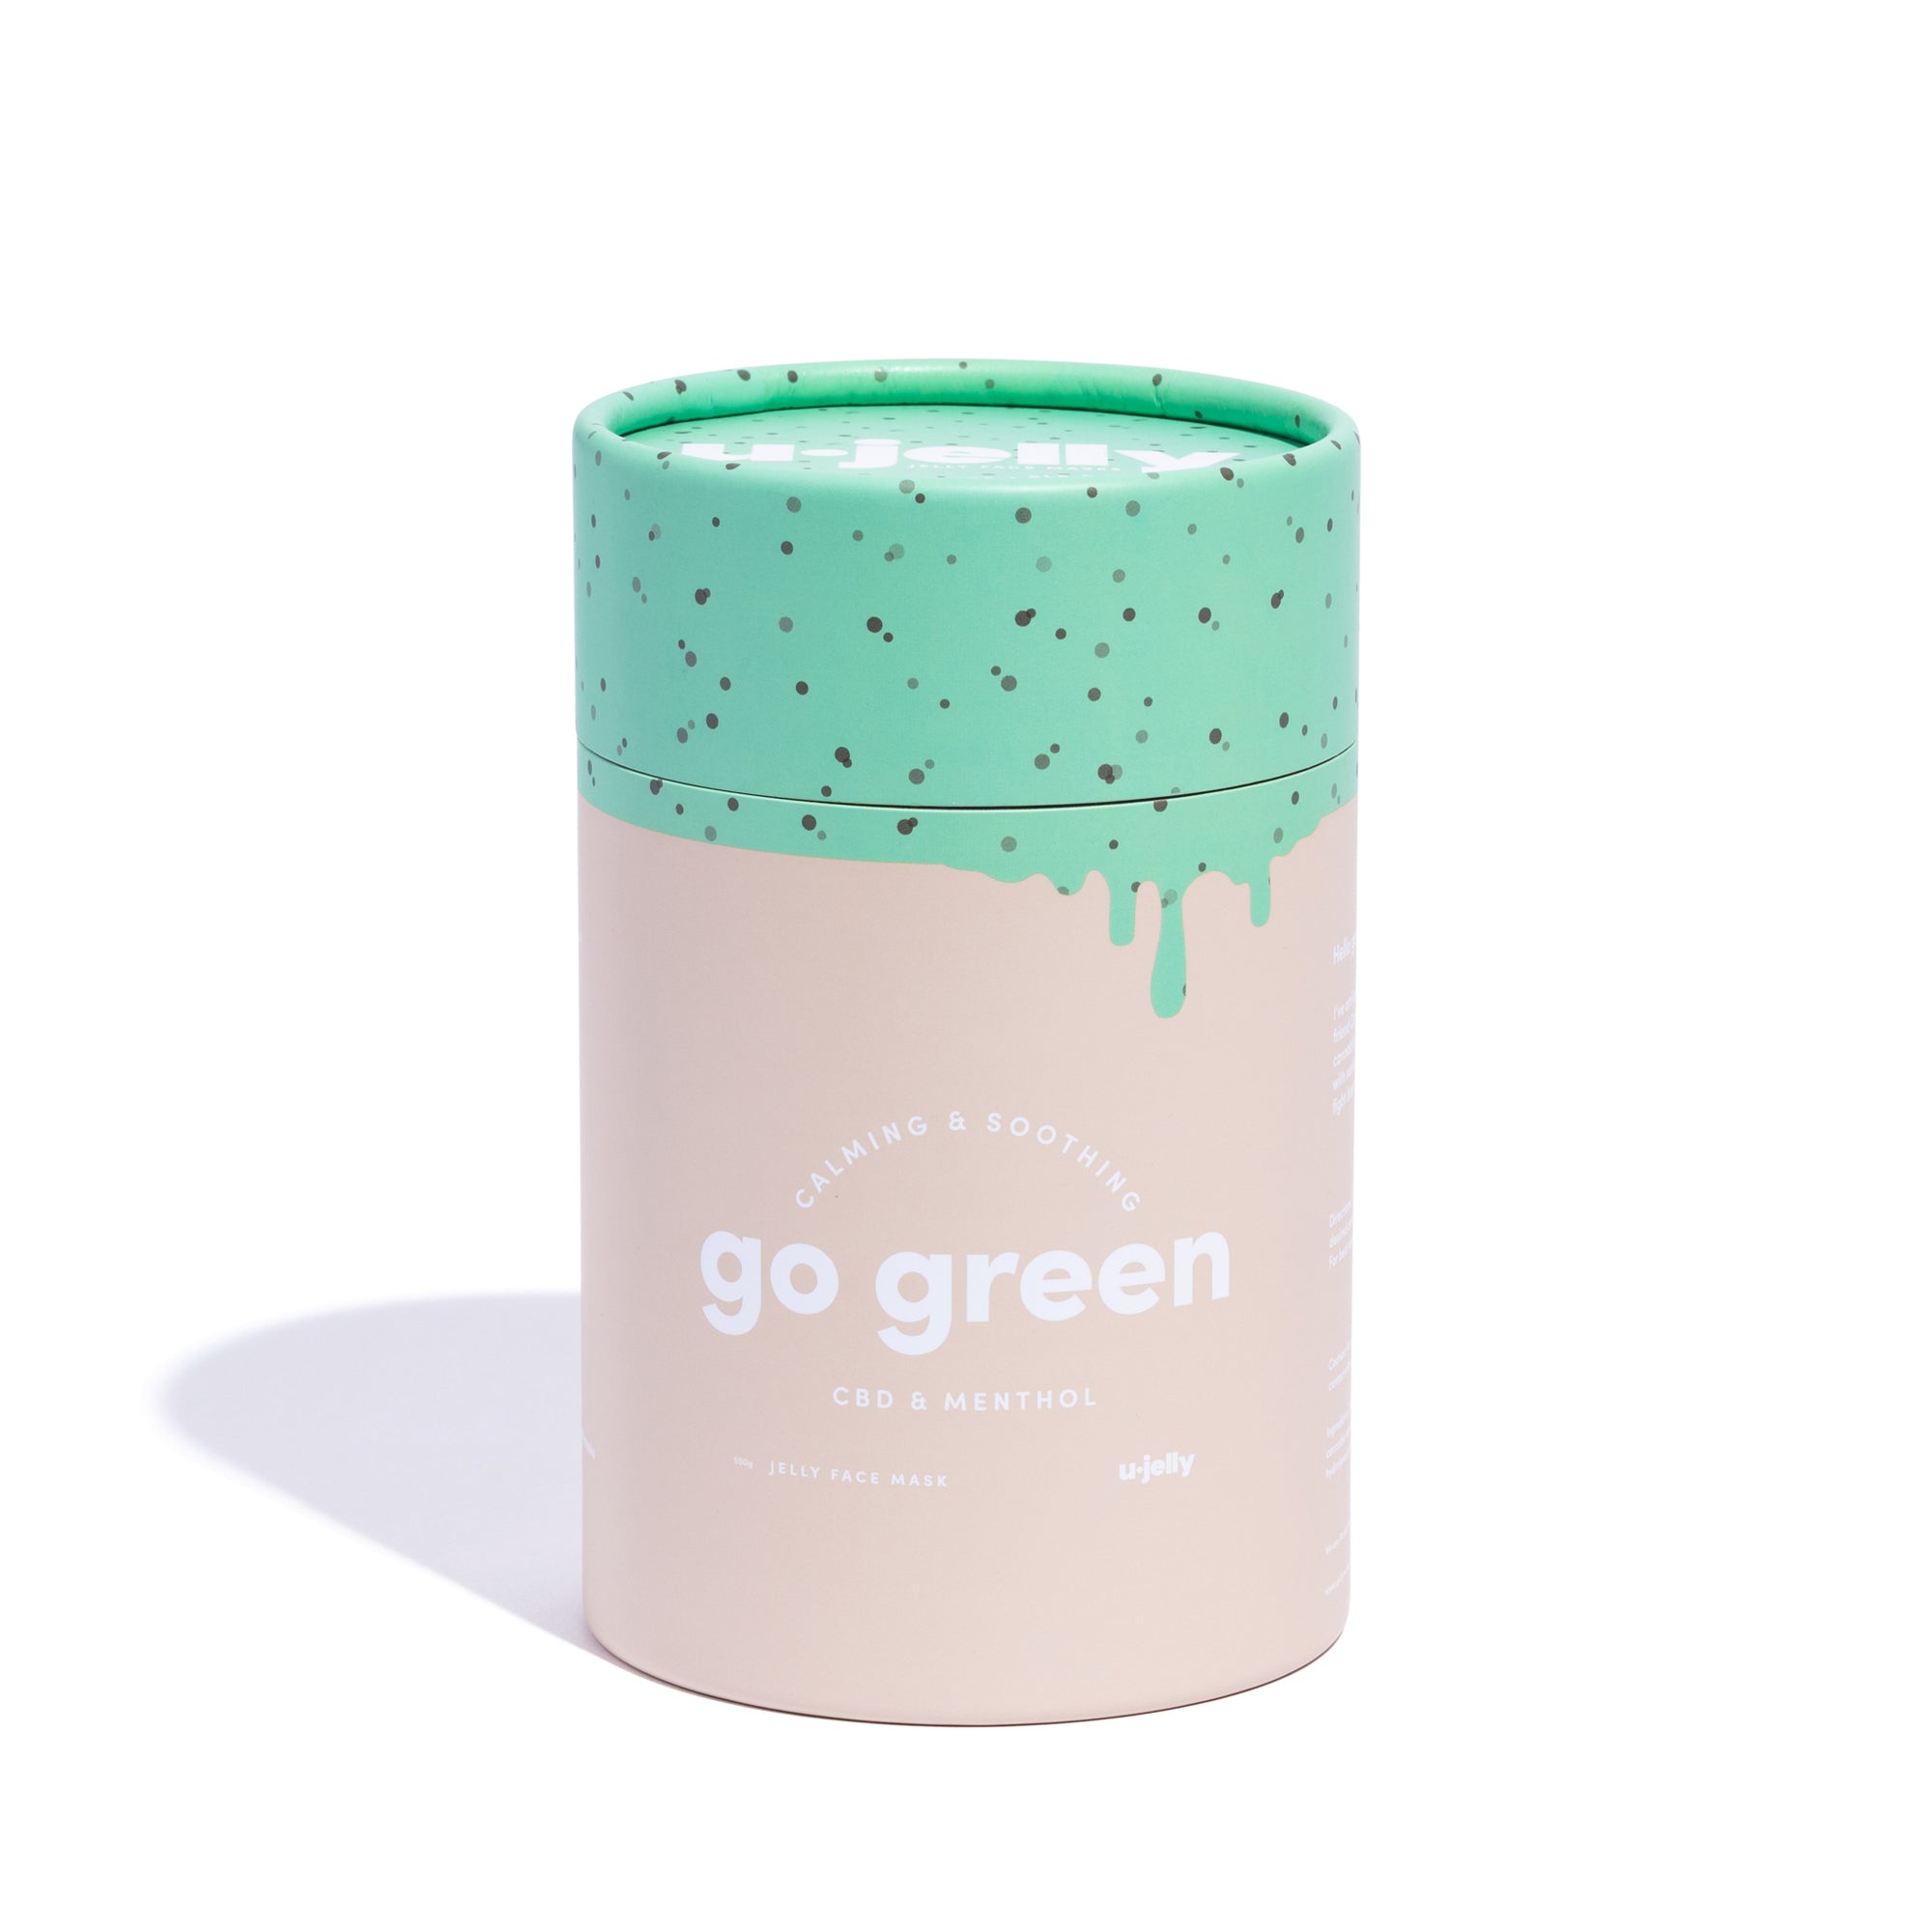 Jelly masks - Go green tub